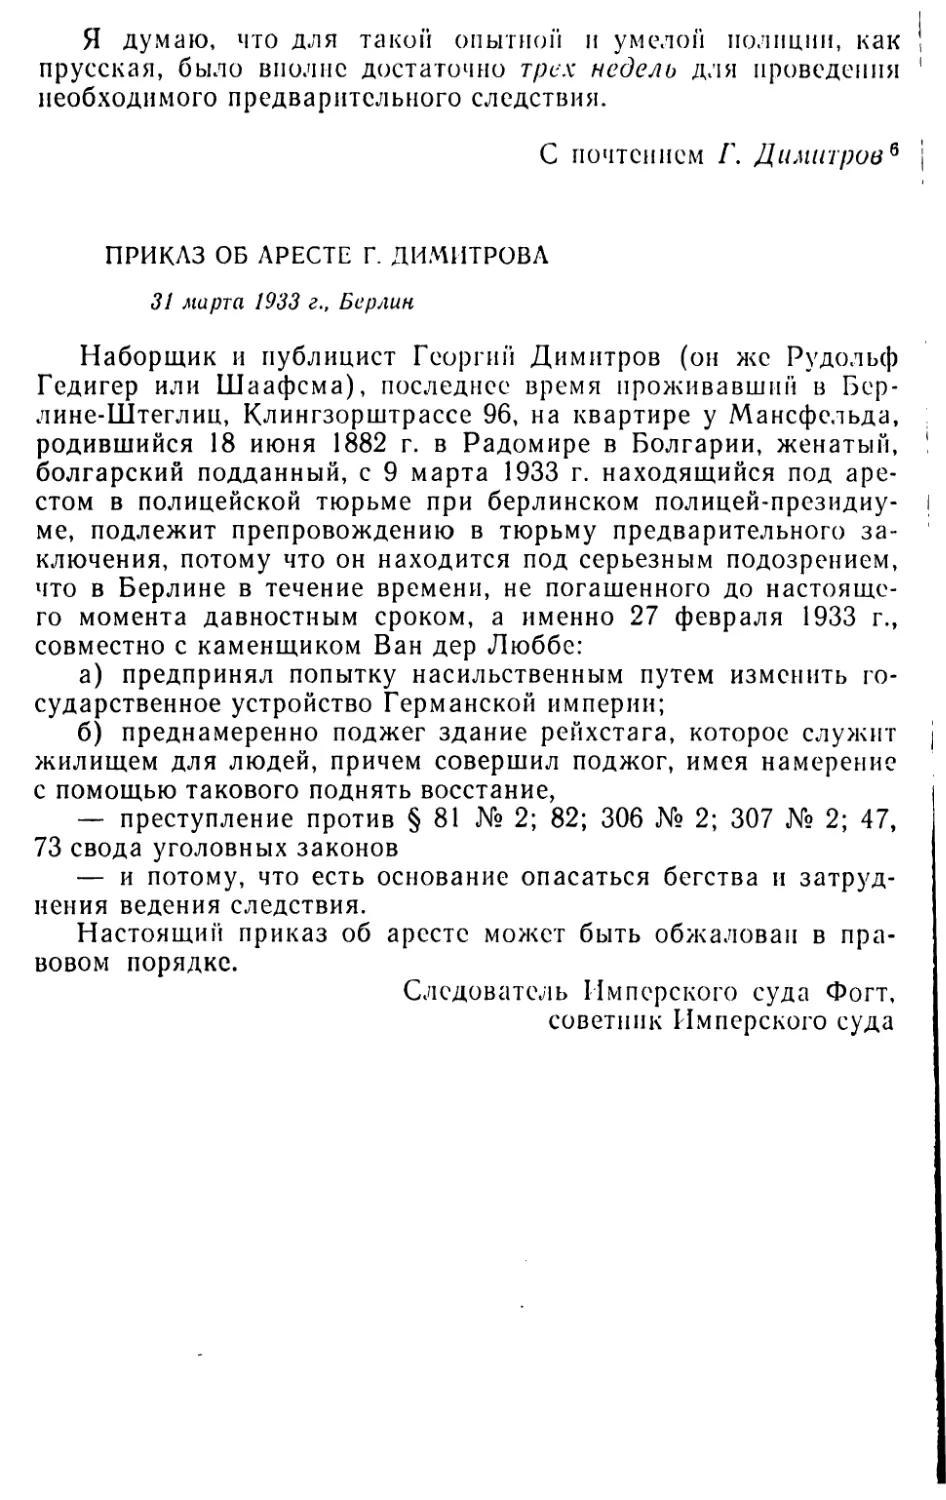 Приказ об аресте Г, Димитрова. 31 марта 1933 г